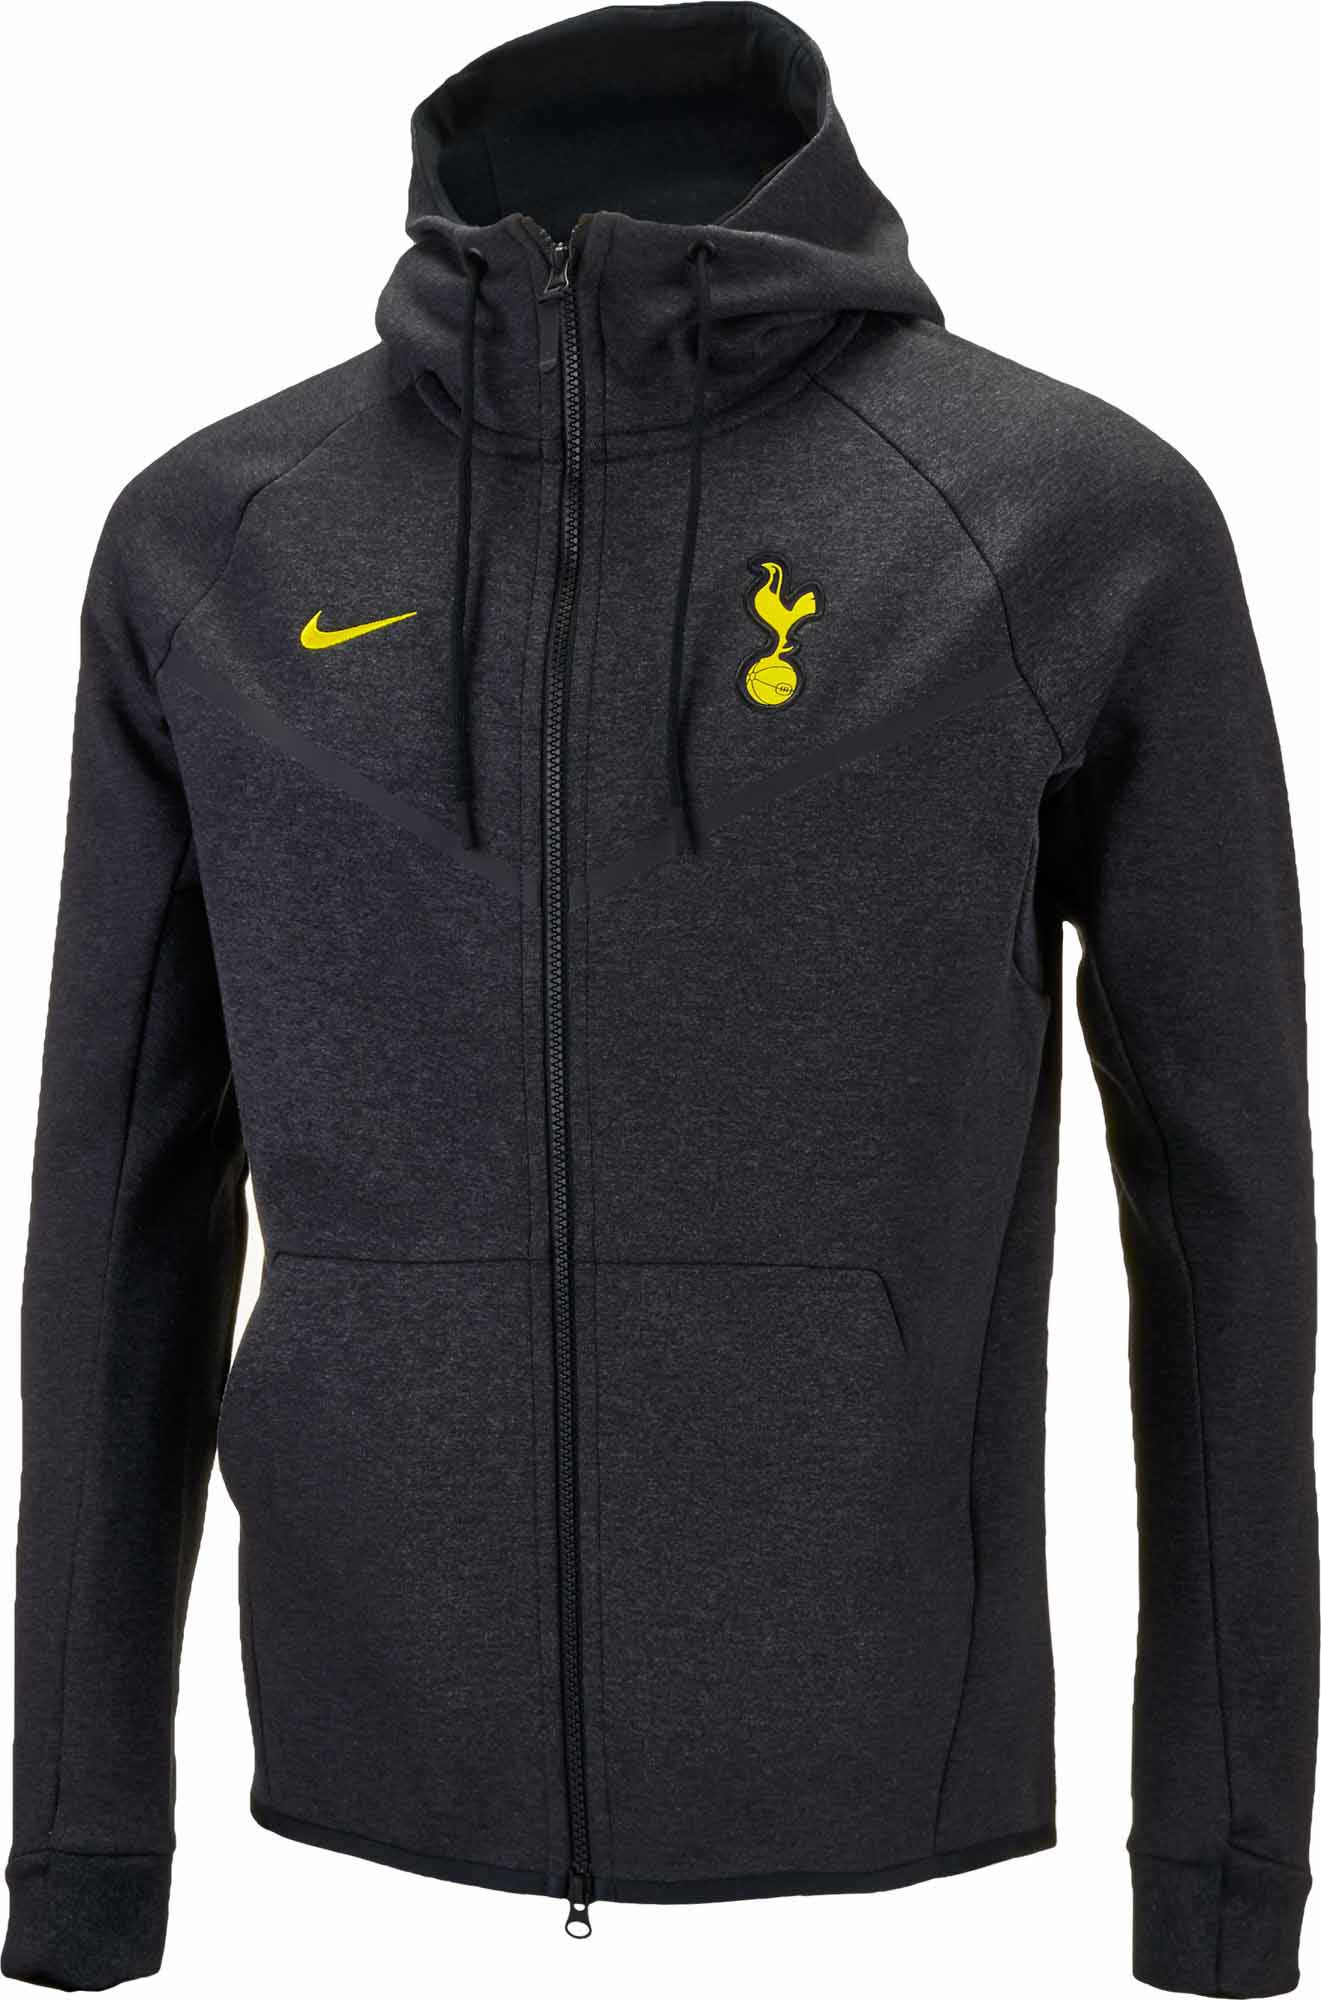 Nike Tottenham Tech Fleece Windrunner Jacket - Heather & Opti Yellow